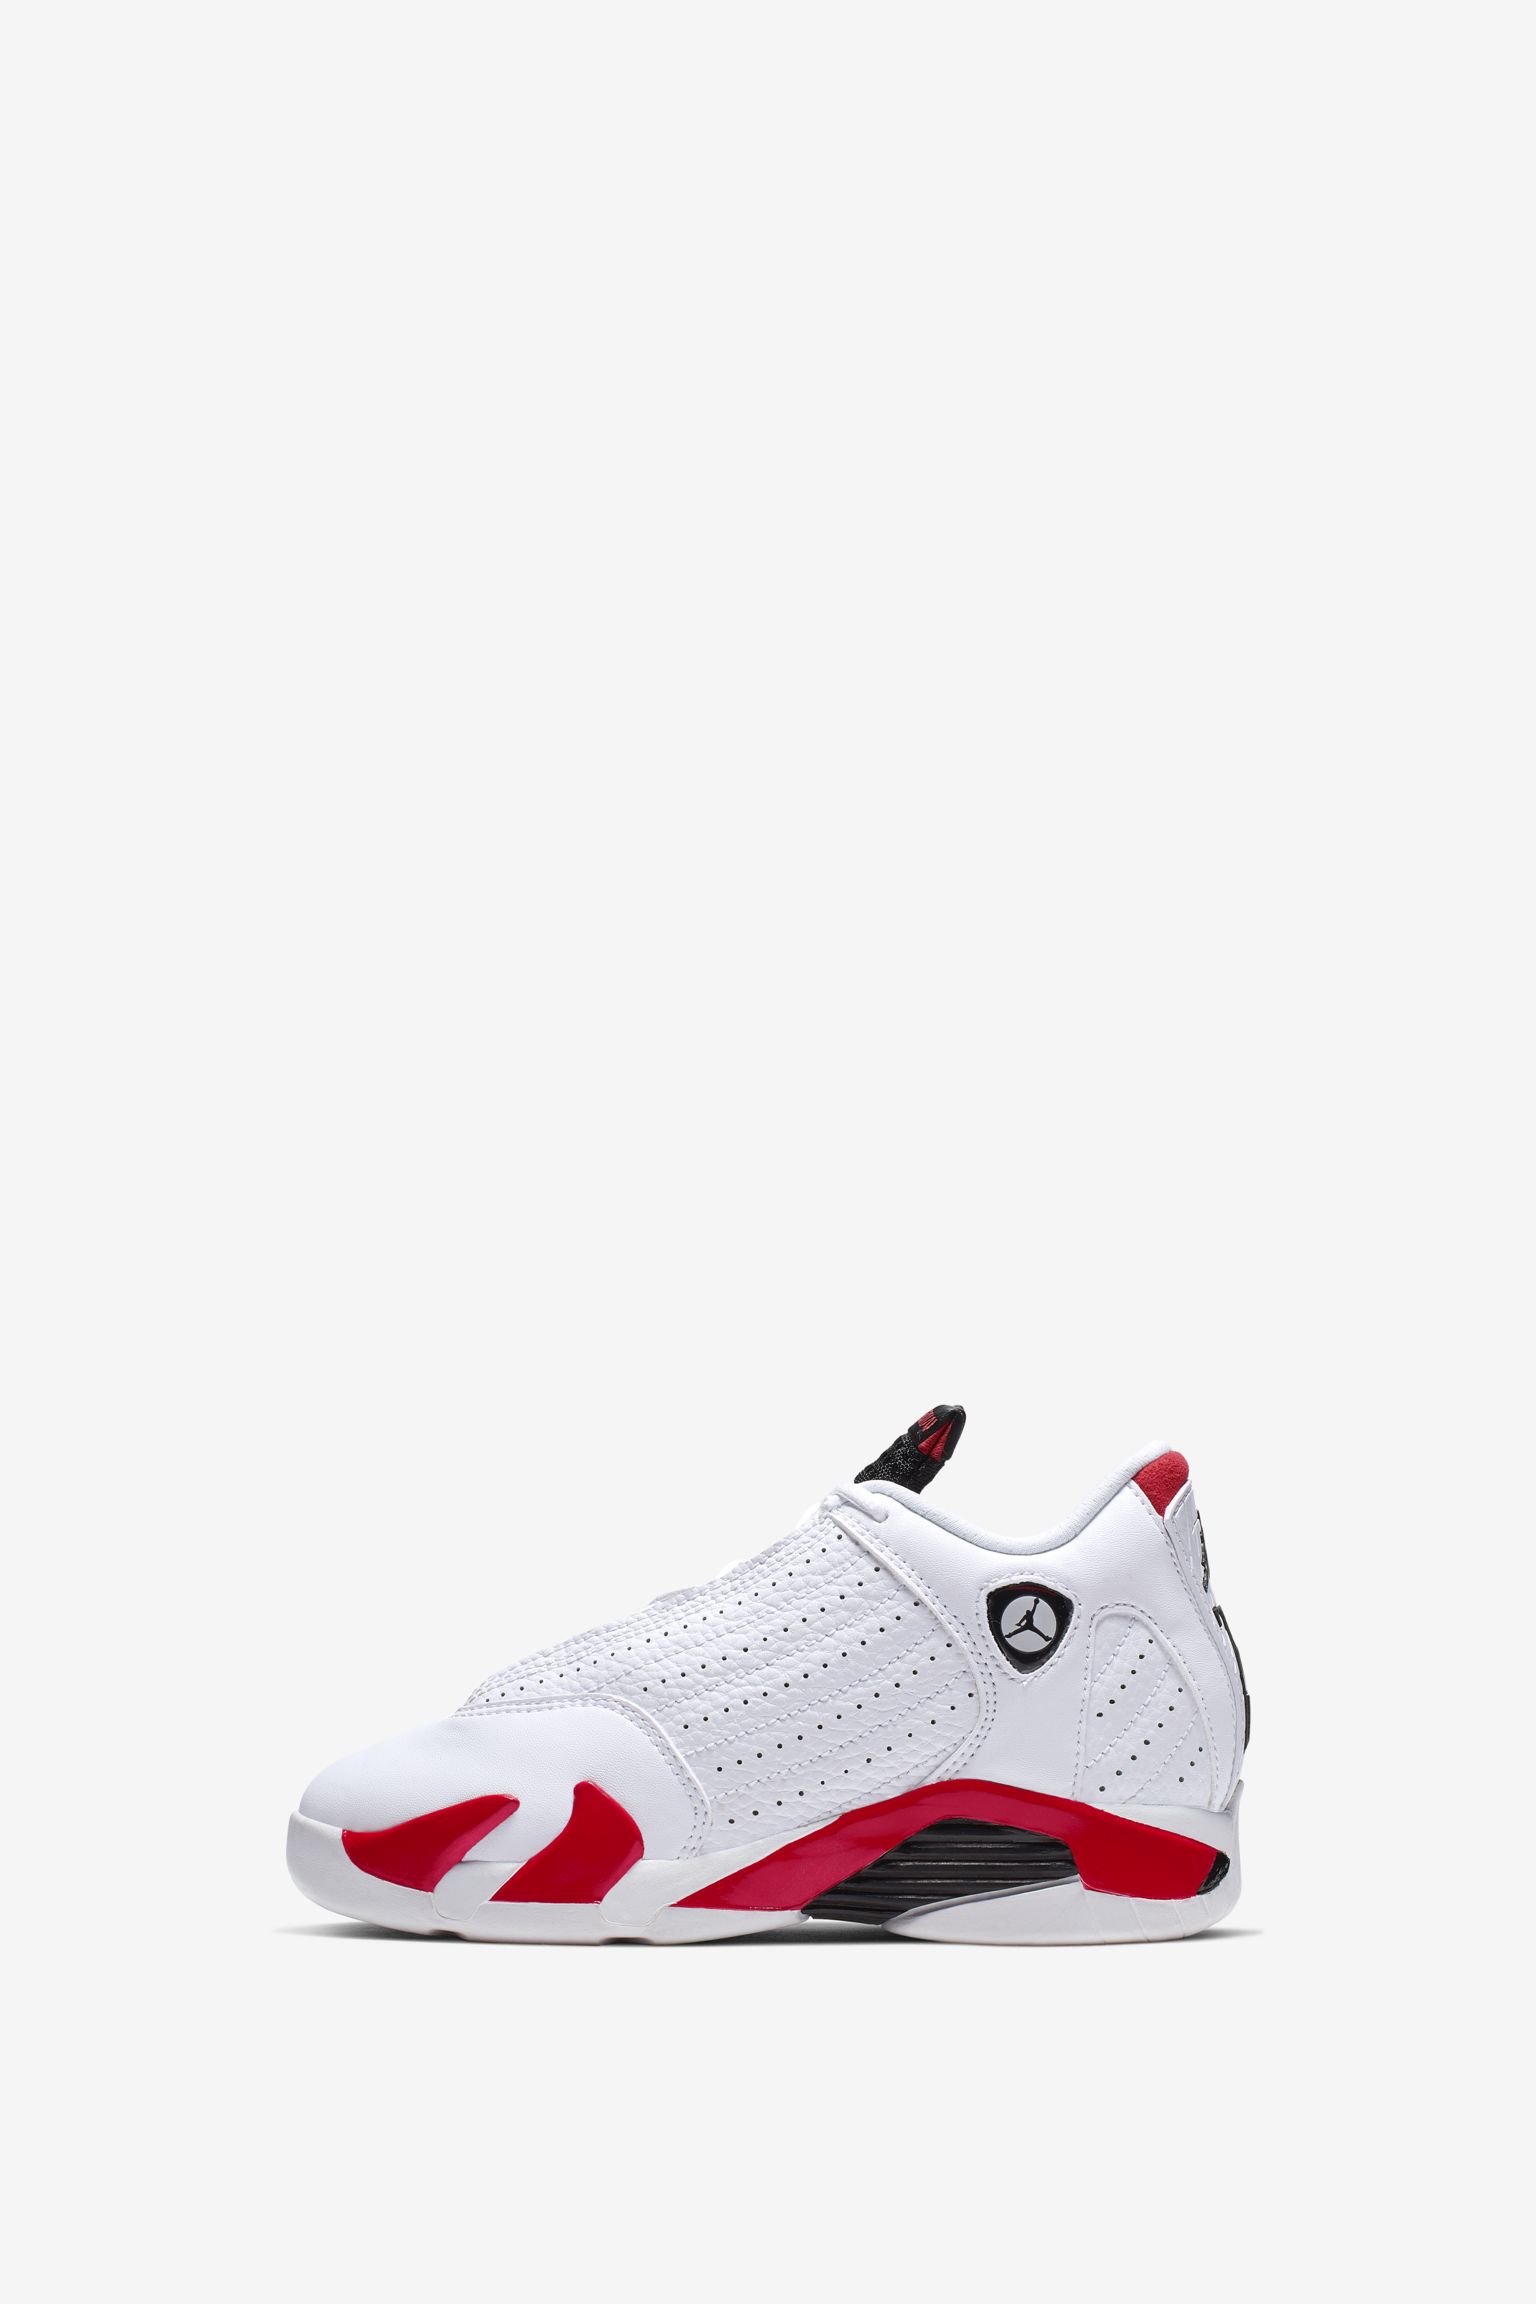 Nike Air Jordan 14 'White \u0026 Red 